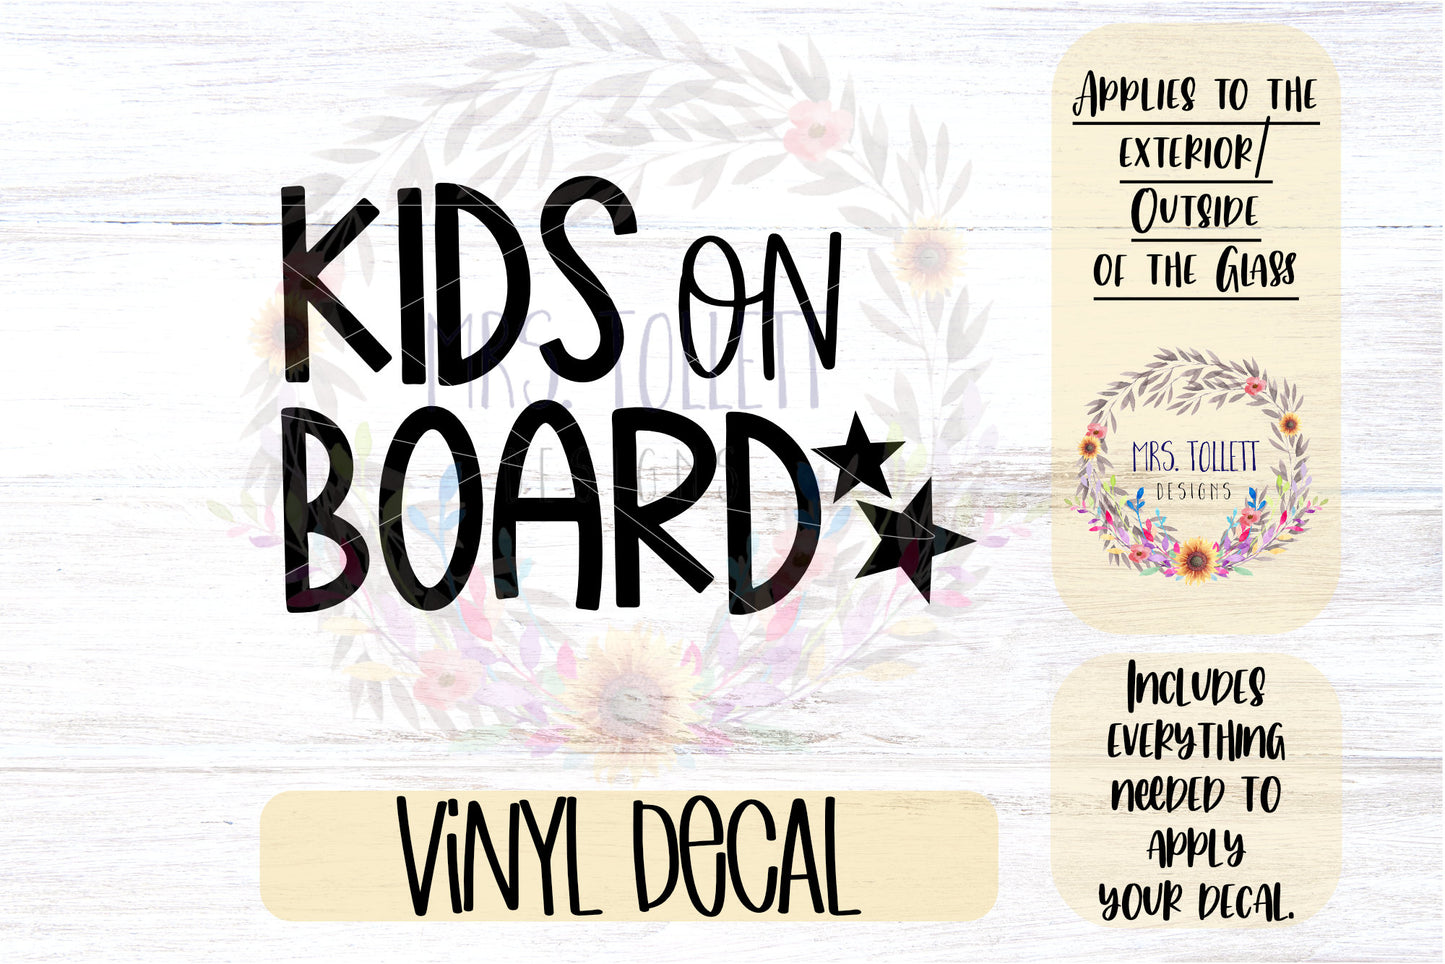 Kids on Board Car Decal | Safety Bumper Sticker